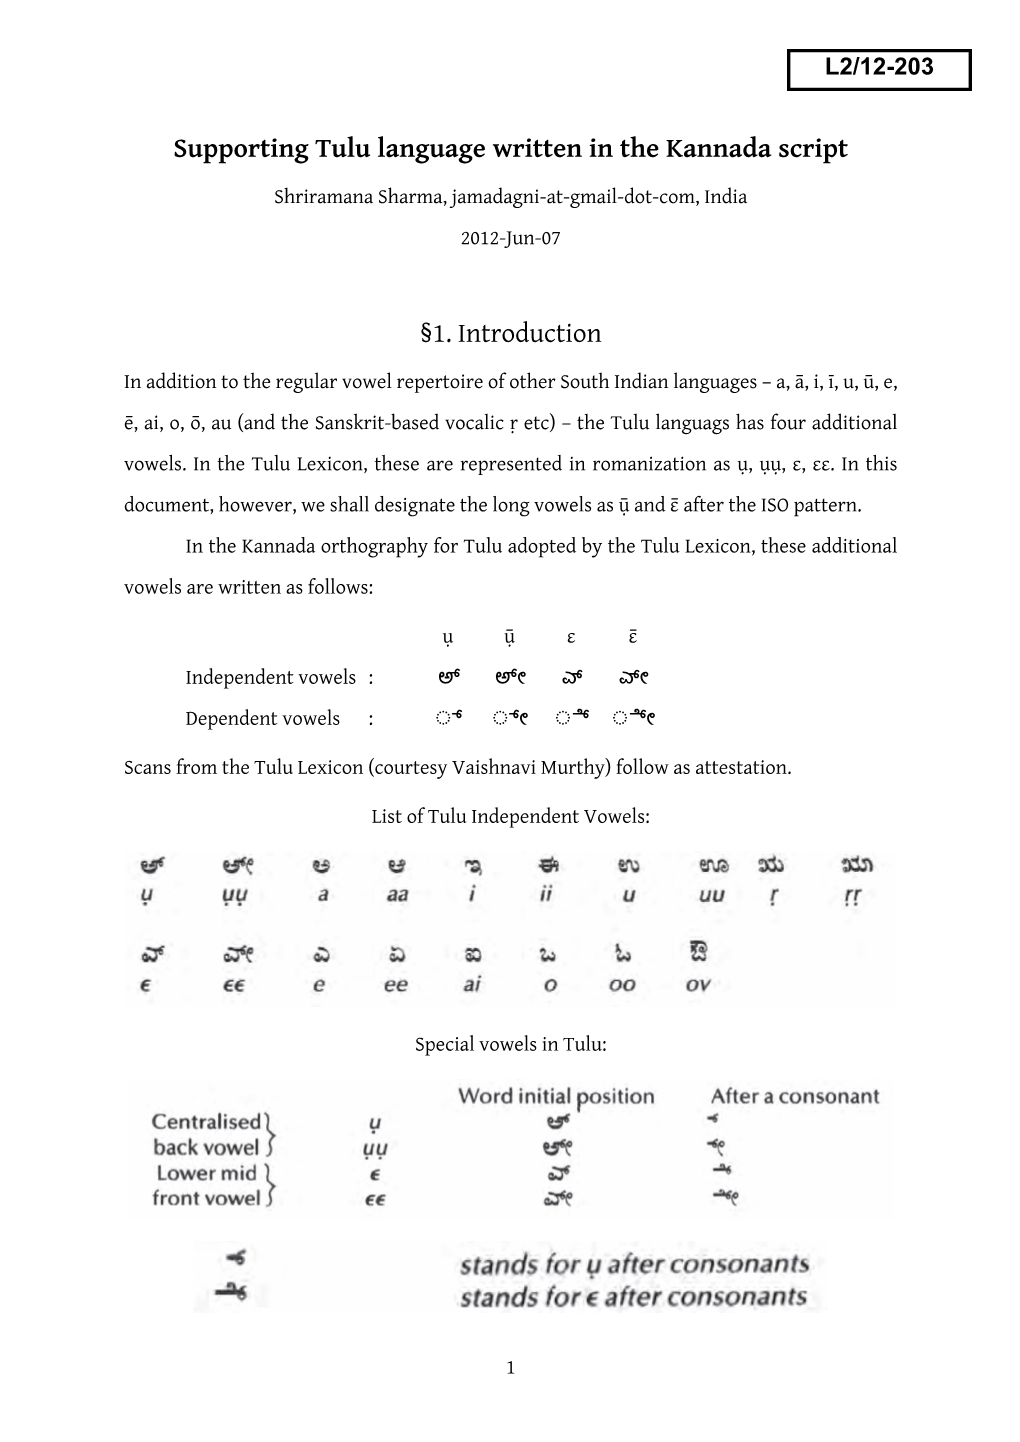 Supporting Tulu Language Written in the Kannada Script §1